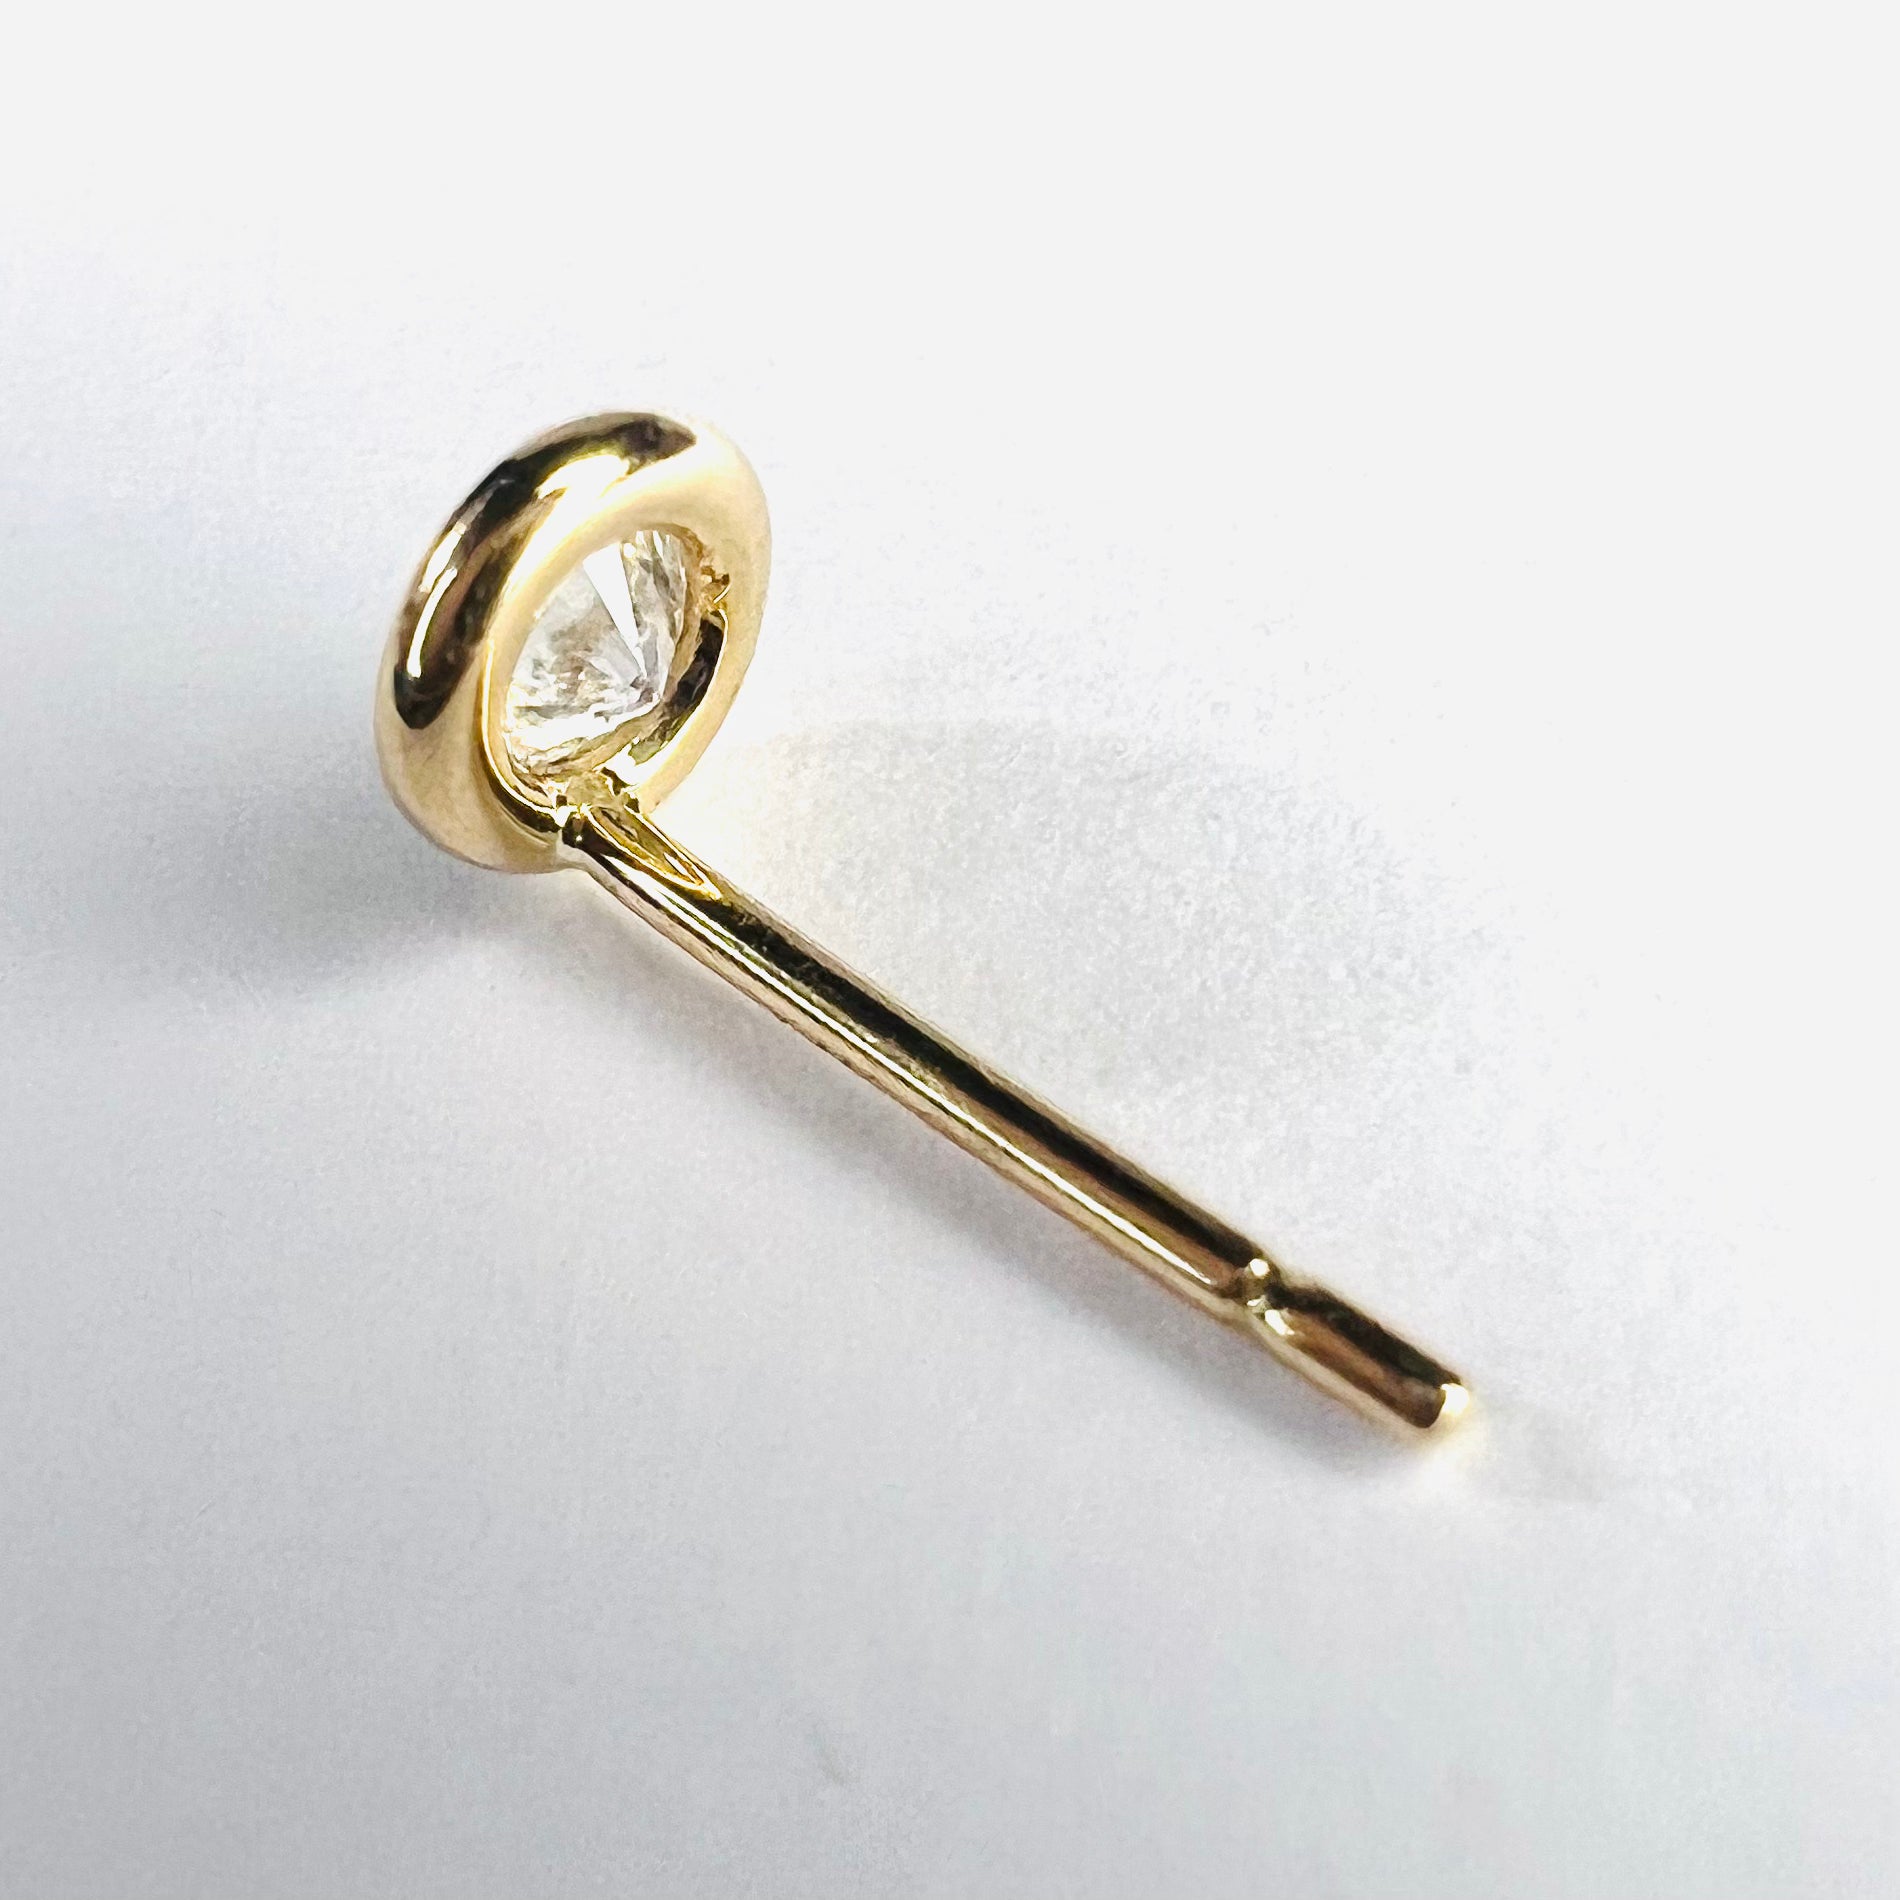 .11ct Natural Diamond 14K Yellow Gold Single Earring Stud 5mm